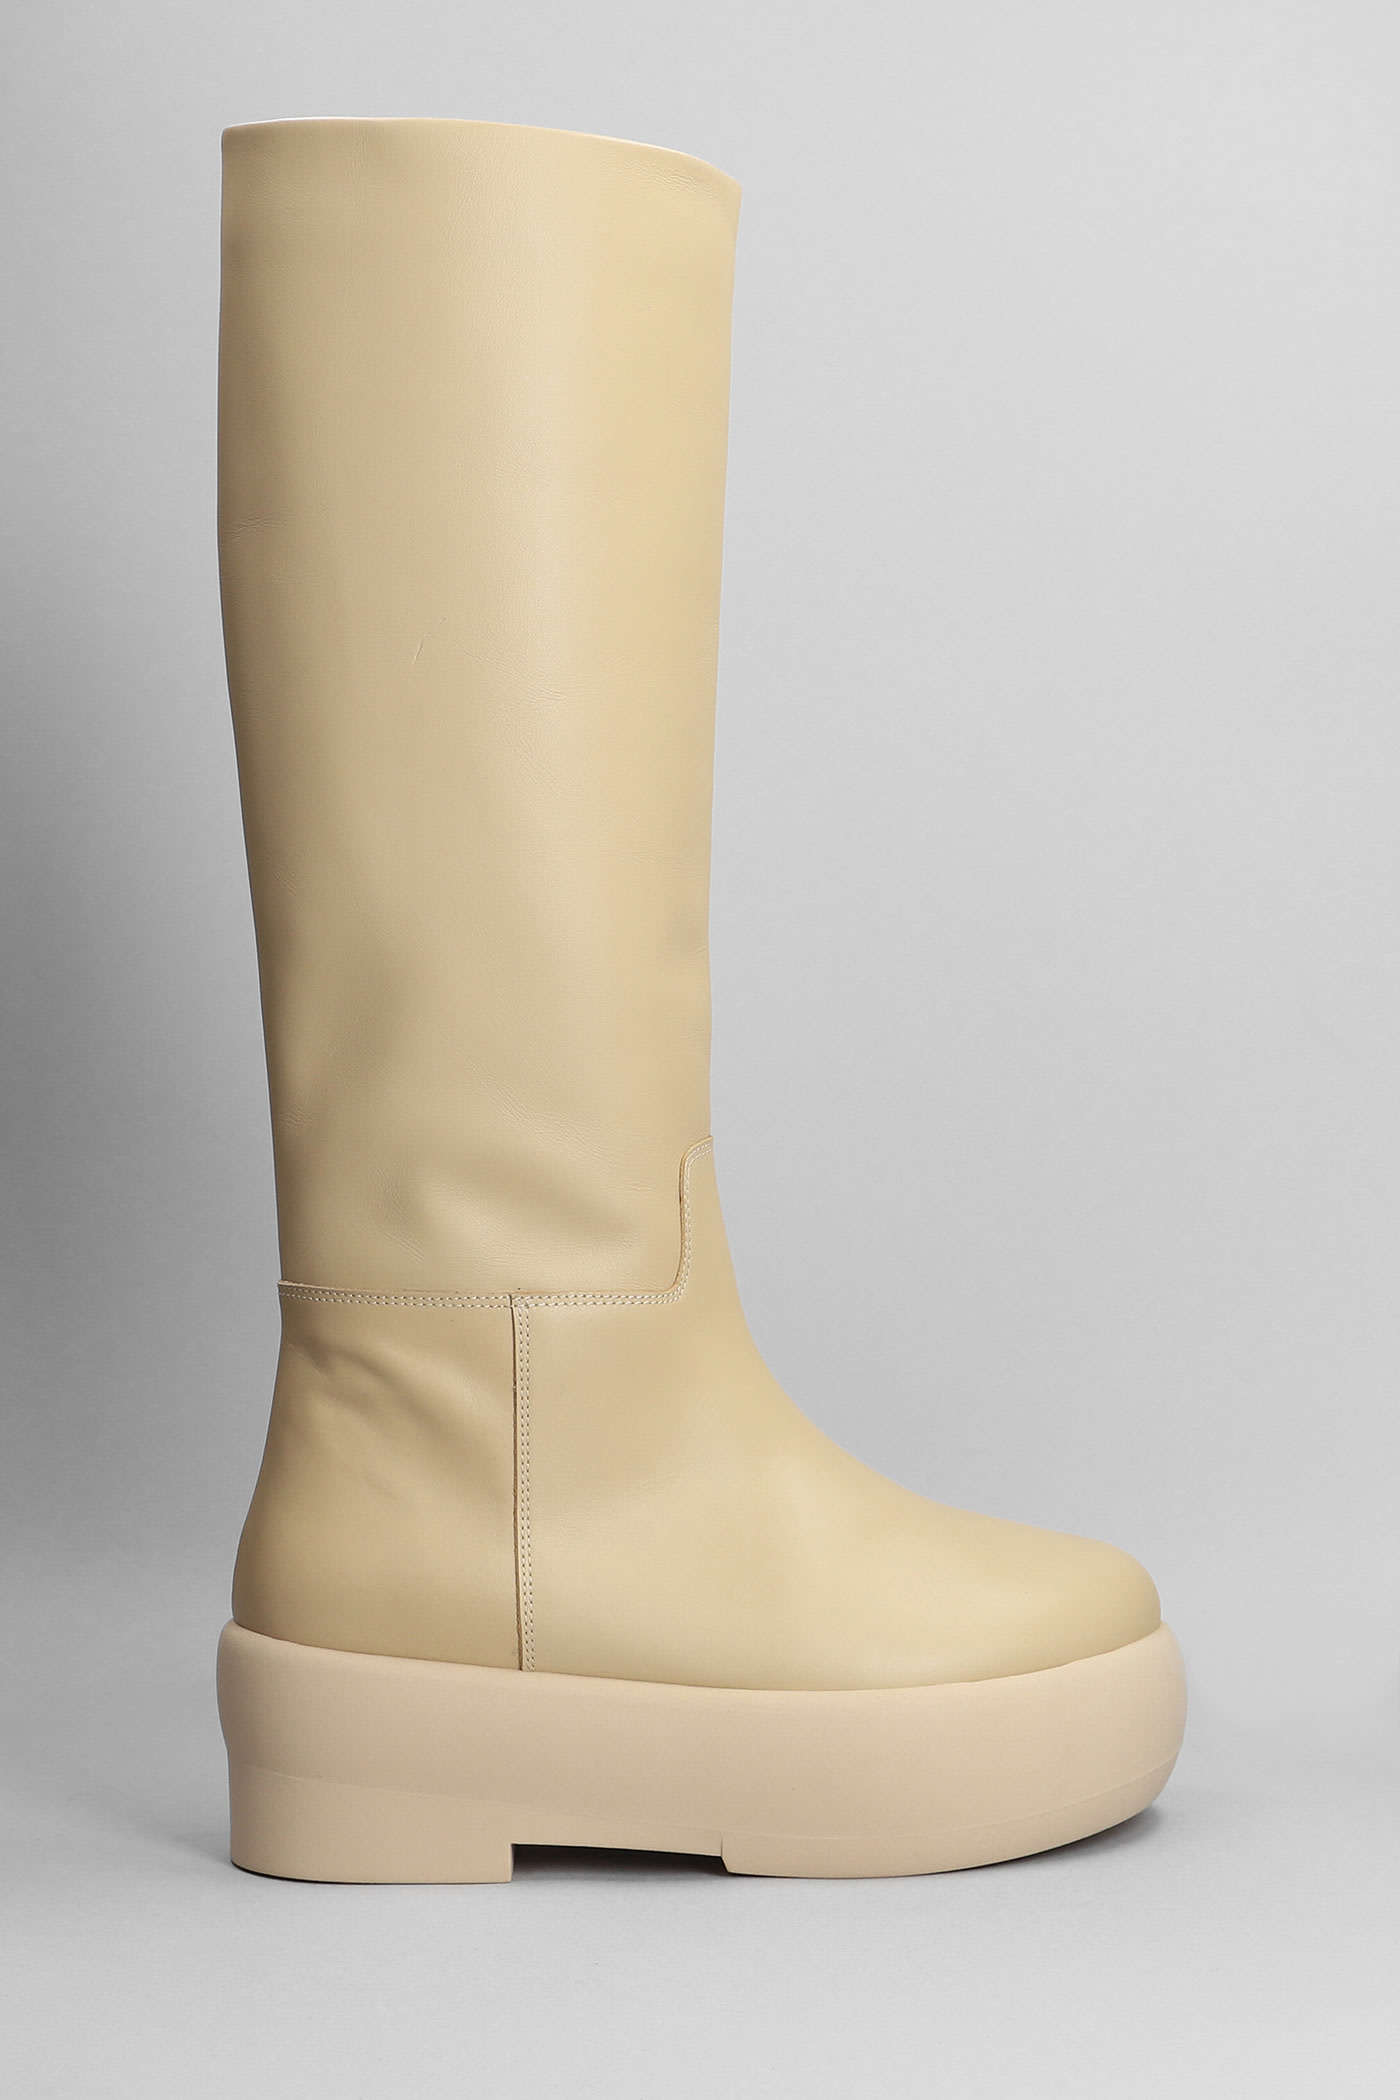 GIA BORGHINI Gia 16 Low Heels Boots In Beige Leather